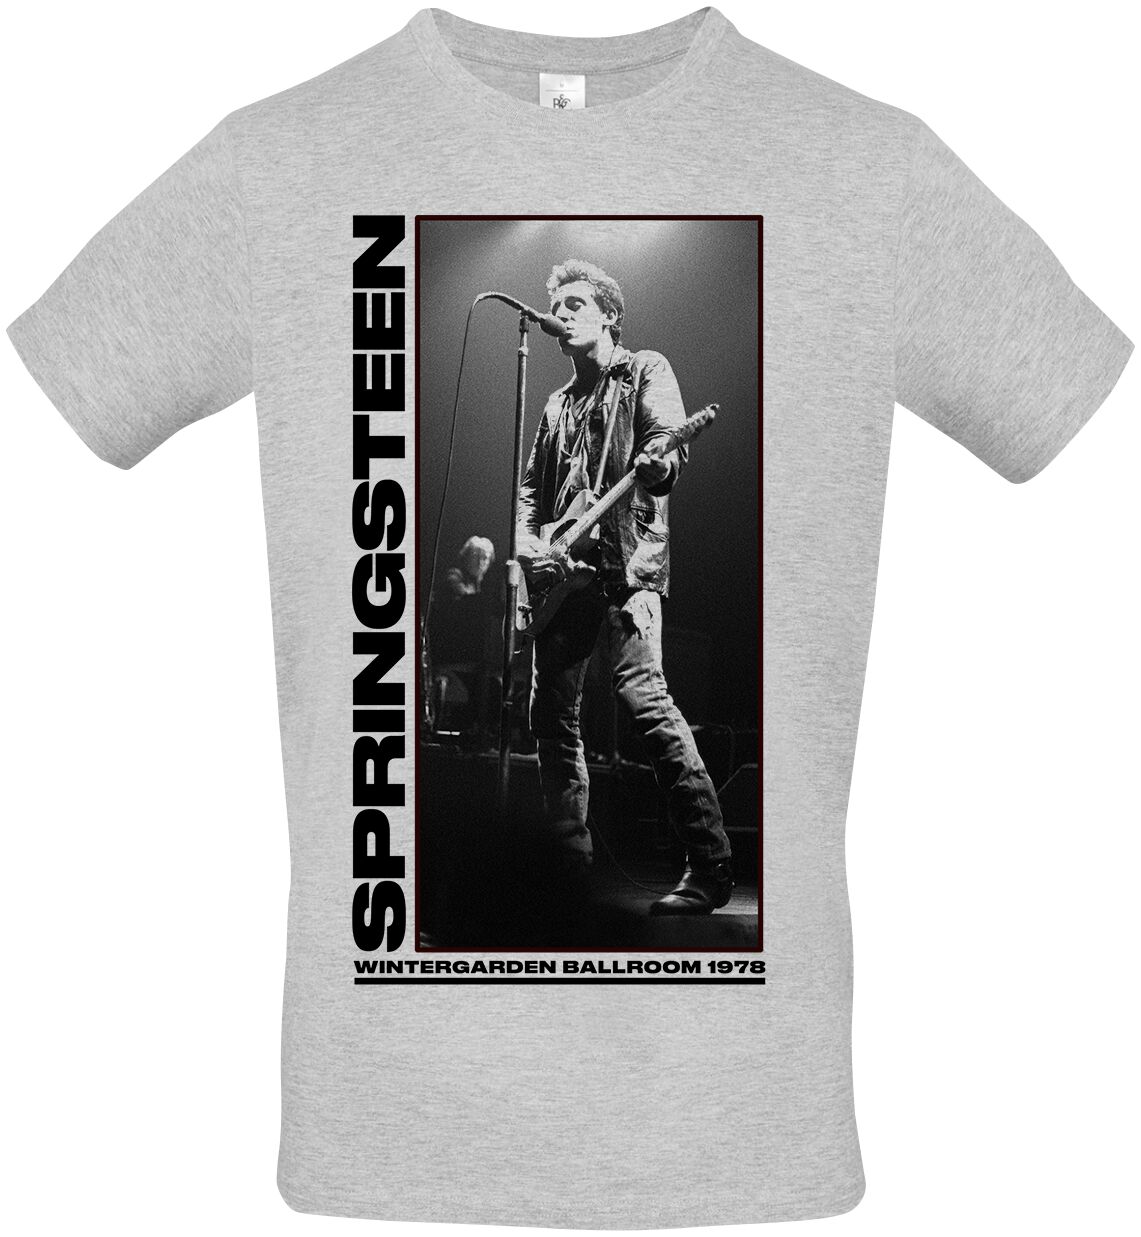 Bruce Springsteen Wintergarden Photo T-Shirt grau meliert in L